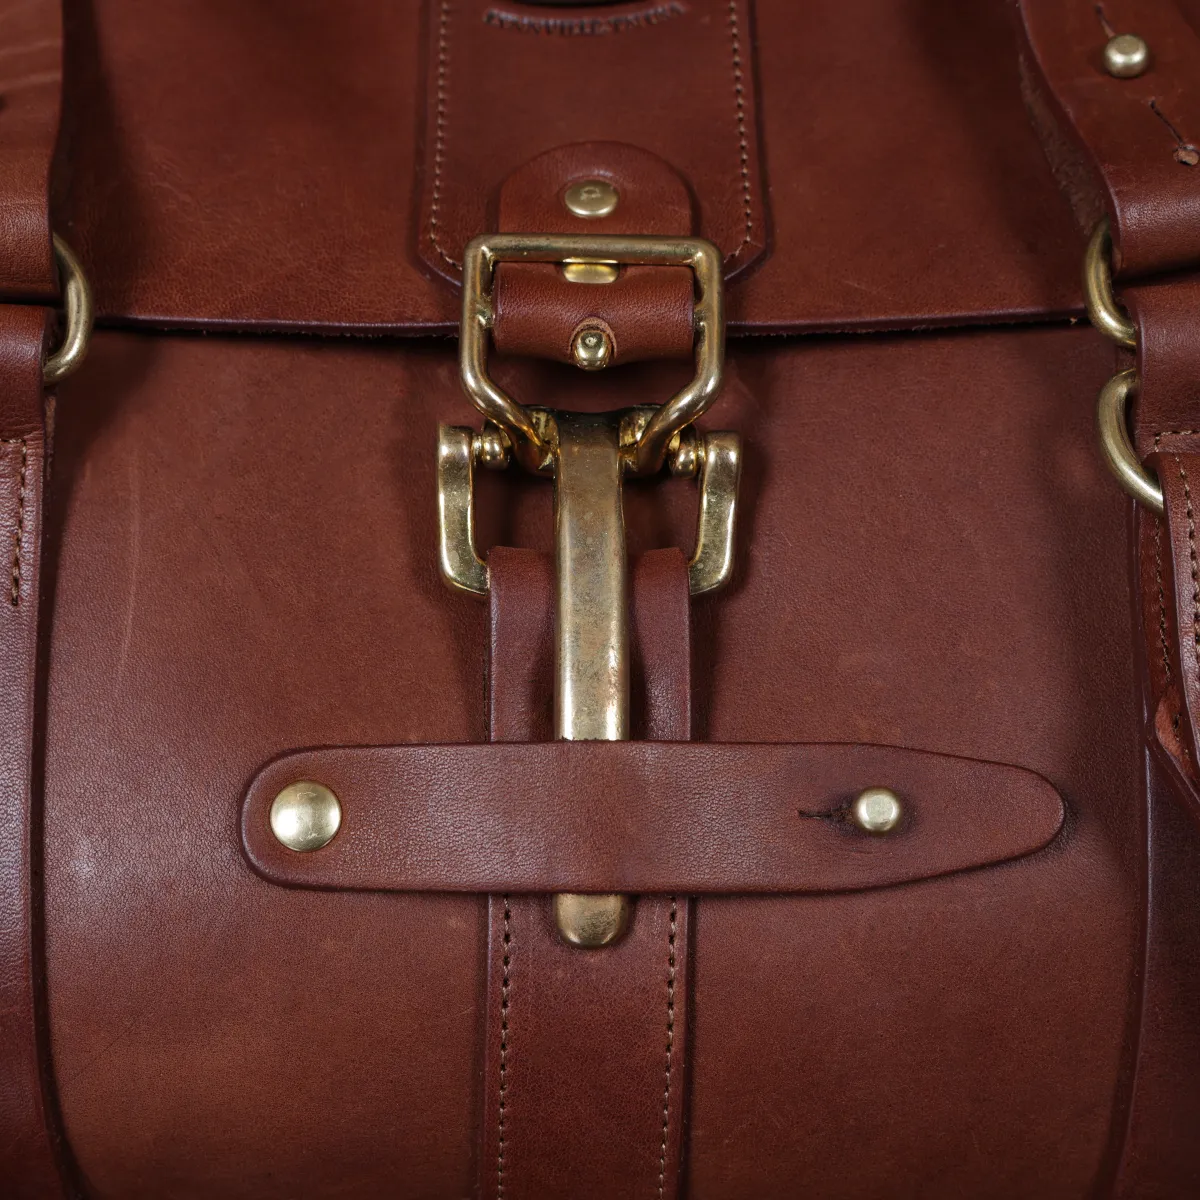 Buy Louis Vuitton Duffle Bag Online In India -  India